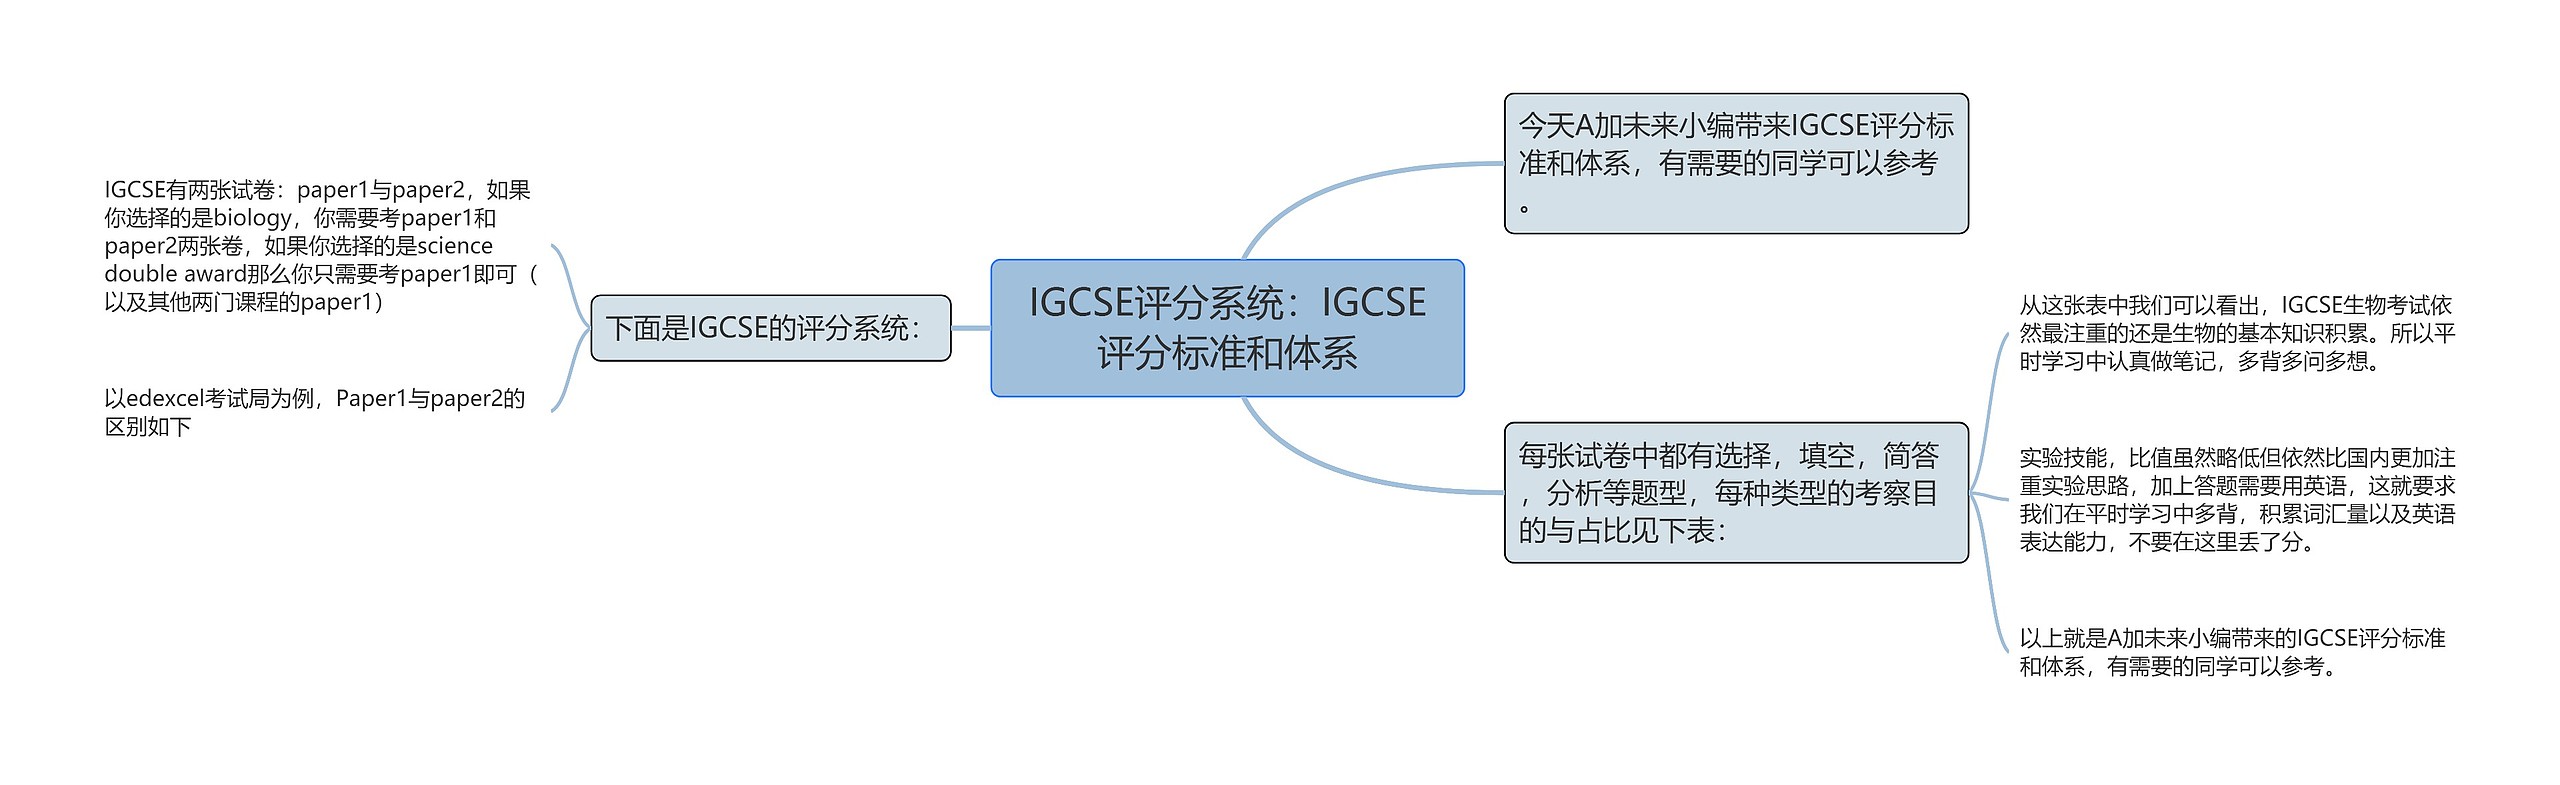 IGCSE评分系统：IGCSE评分标准和体系